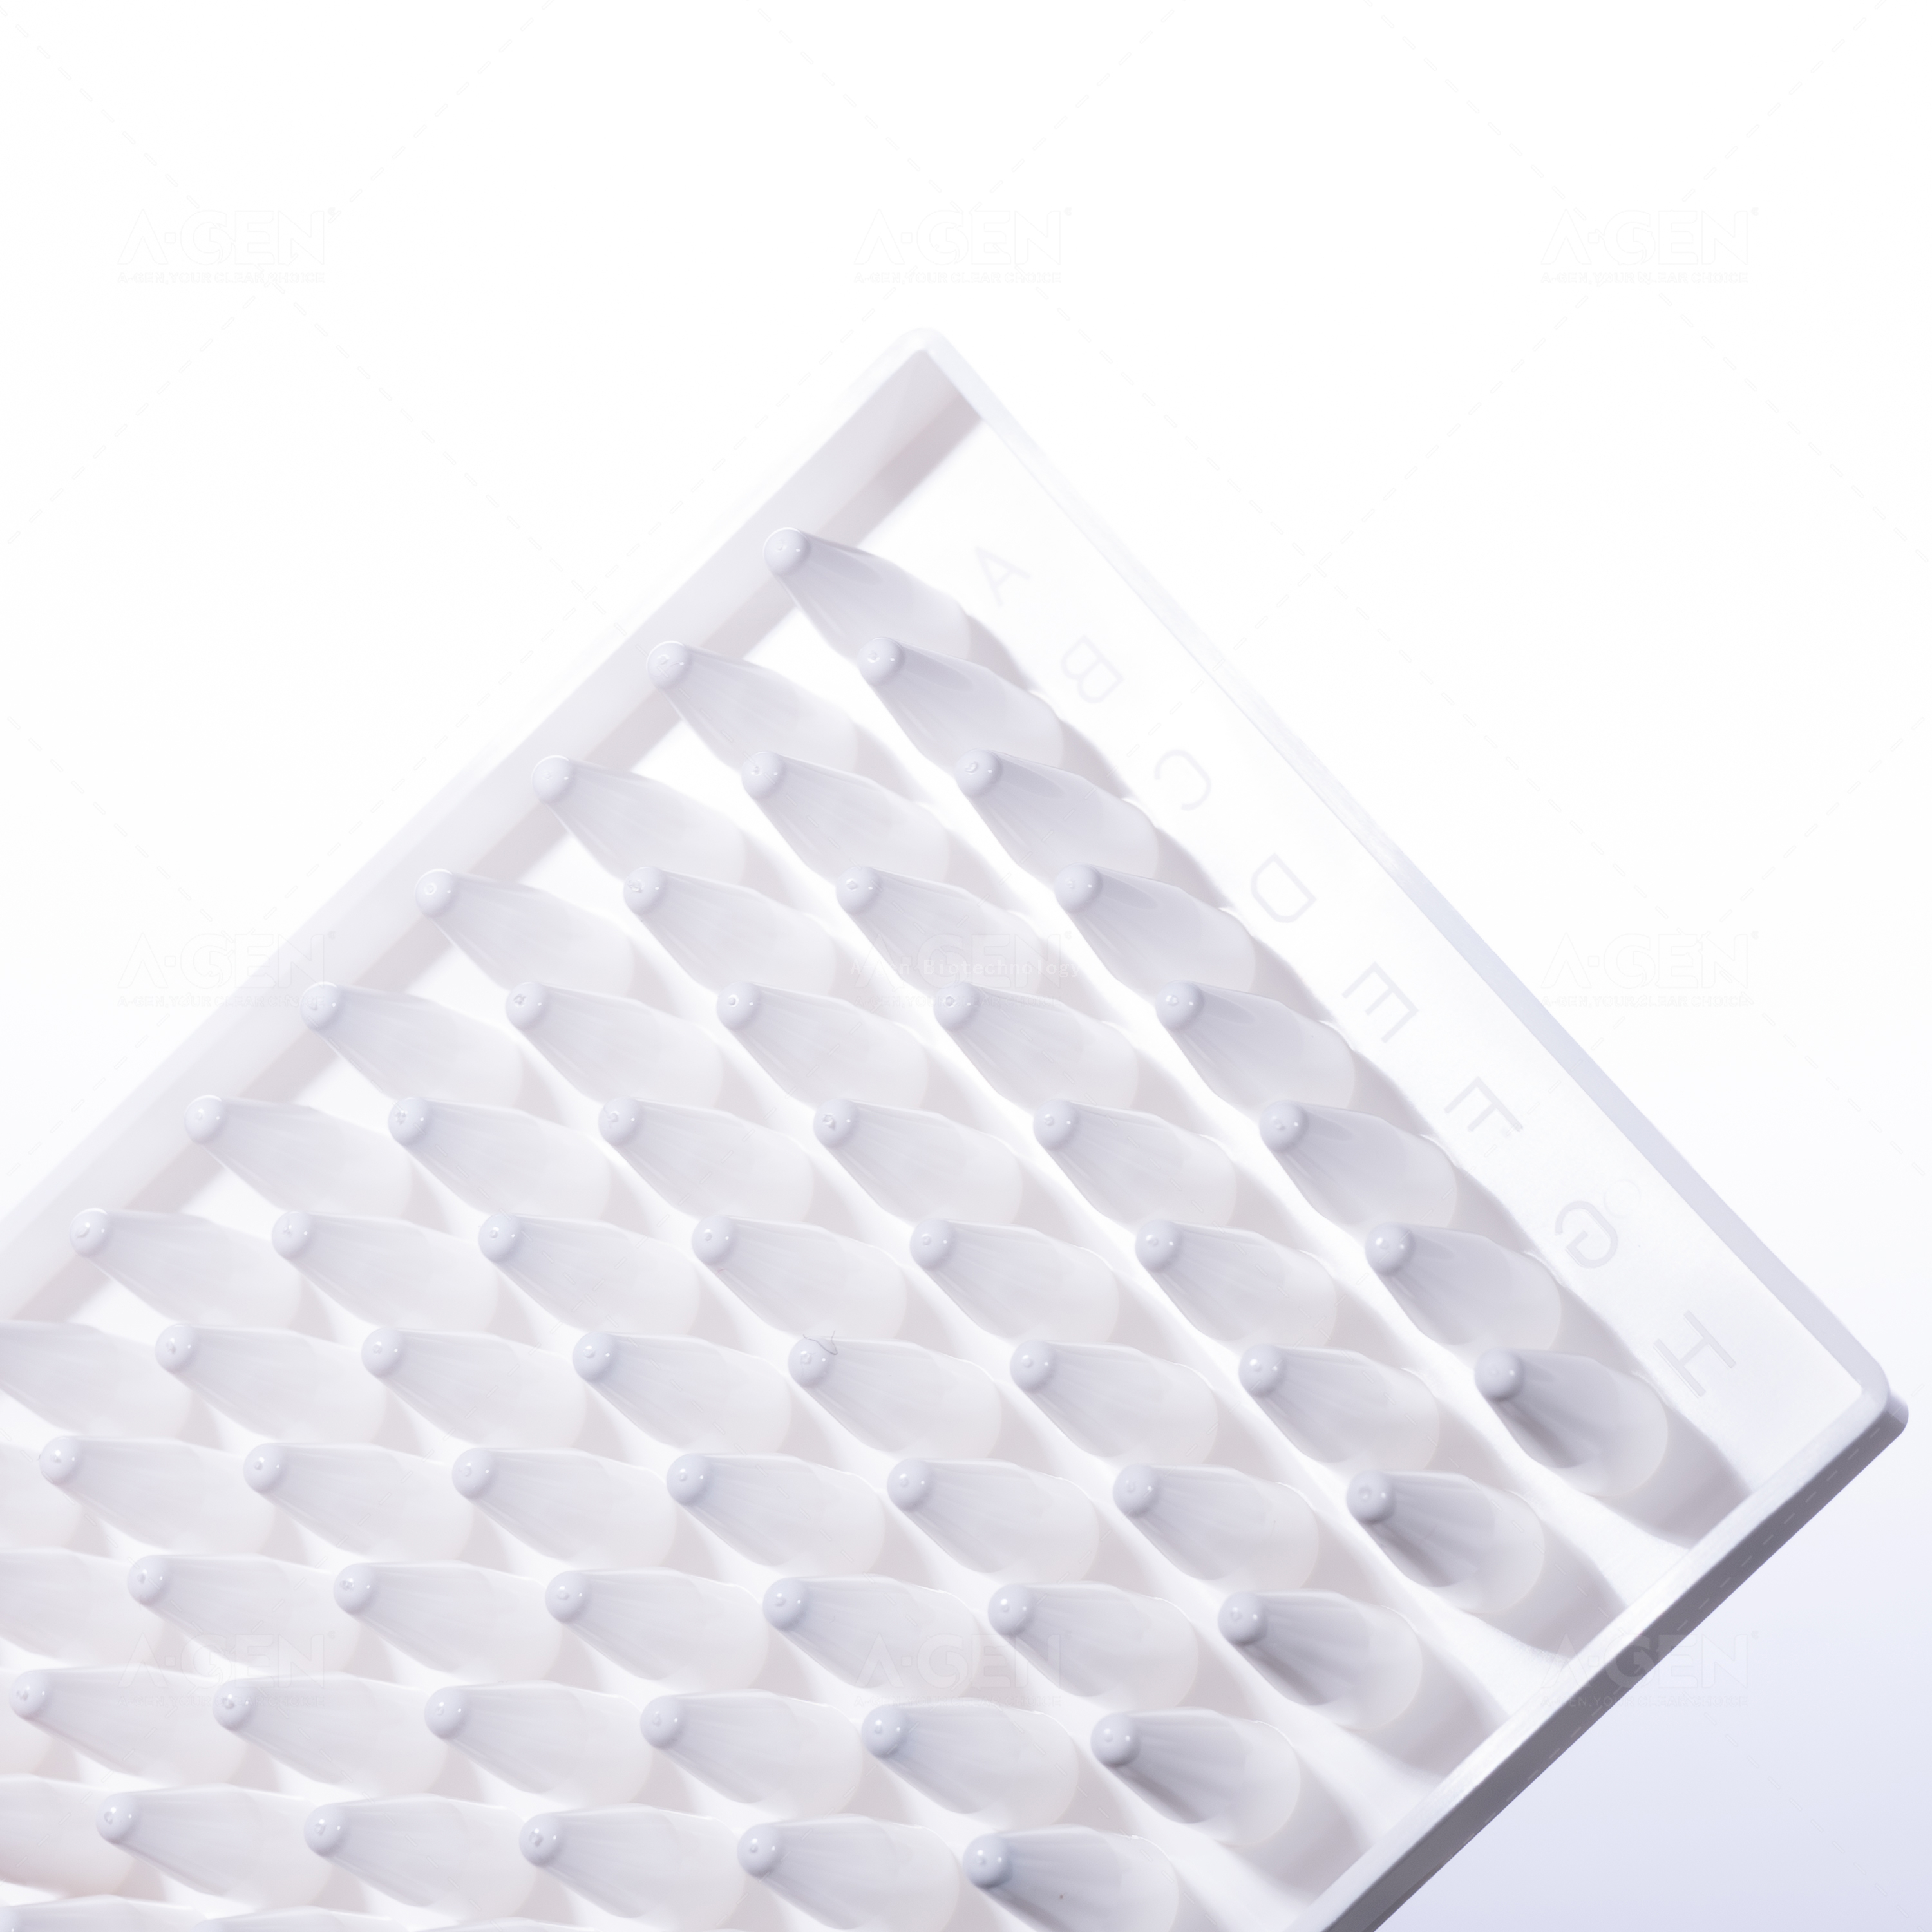 0.2mL White Half Skirt 96 PCR Plate with Black Mark